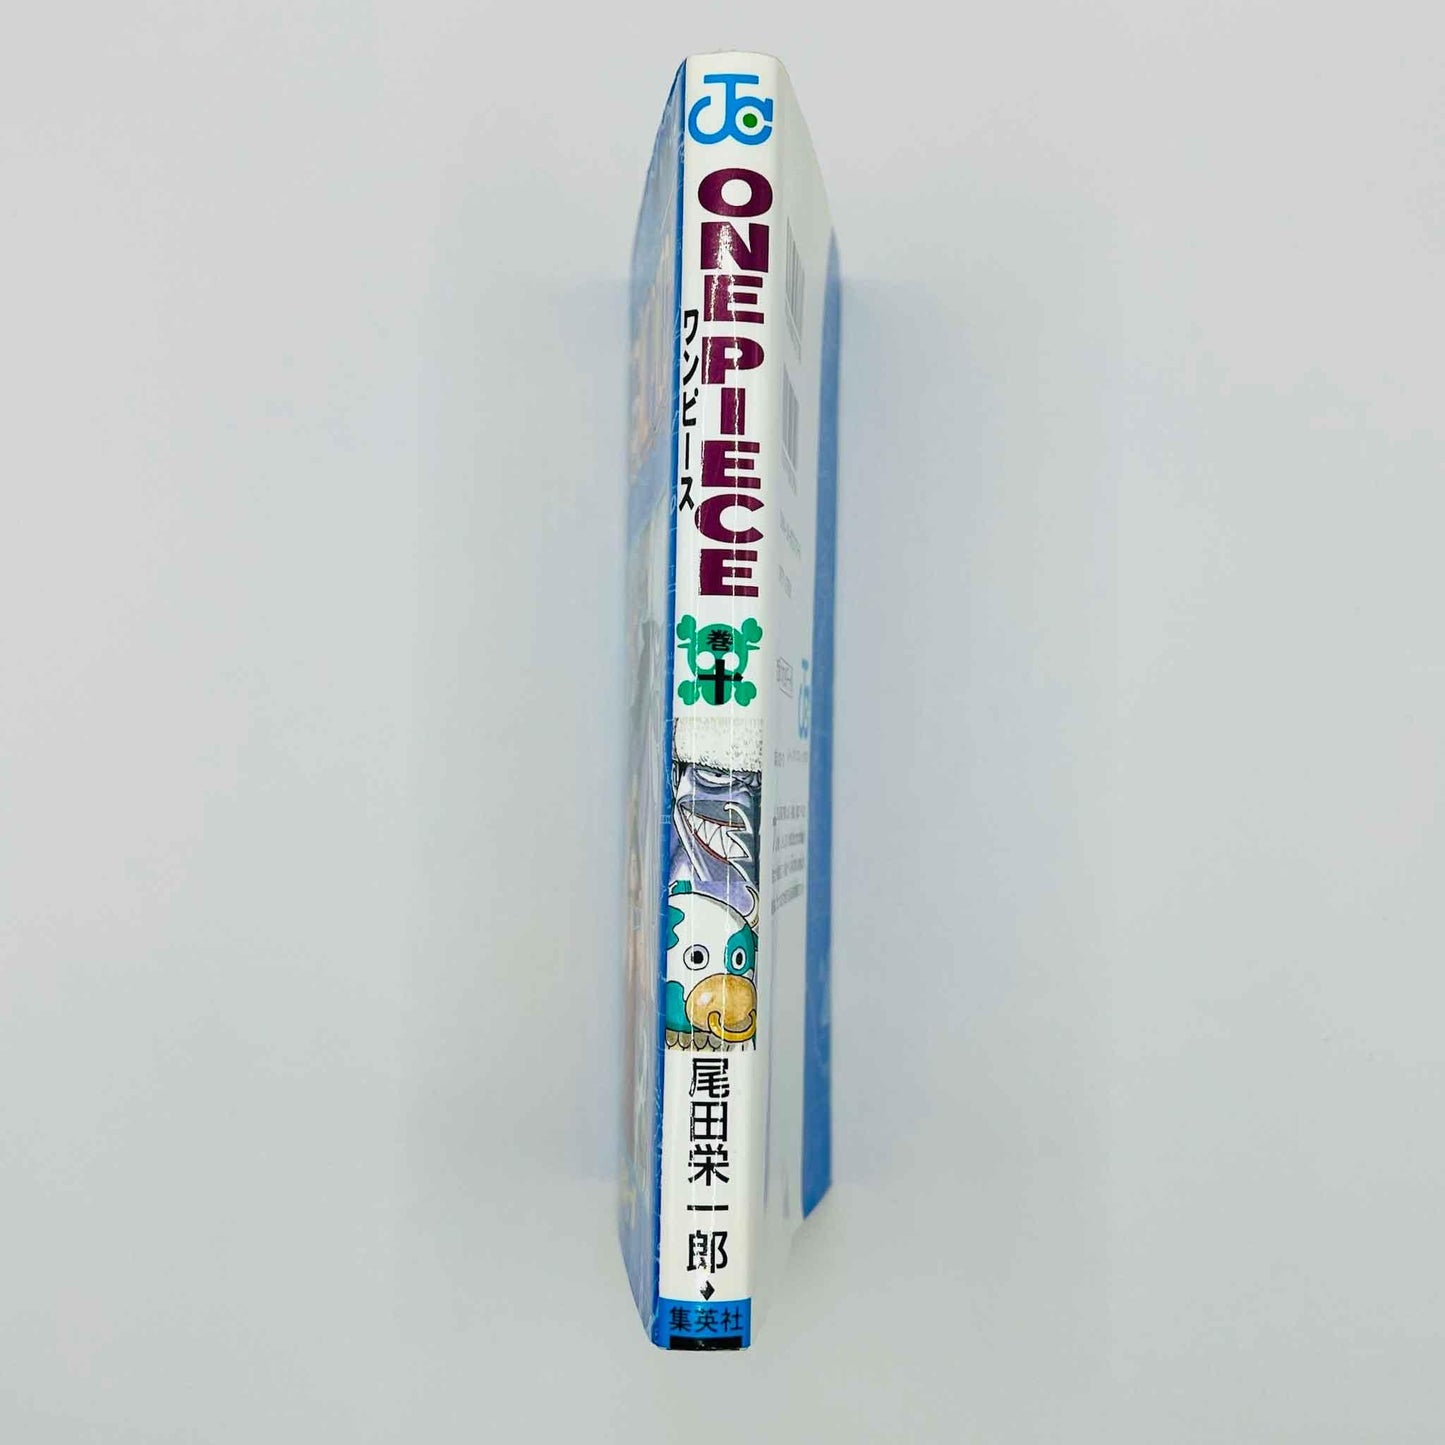 One Piece - Volume 10 - 1stPrint.net - 1st First Print Edition Manga Store - M-OP-10-002